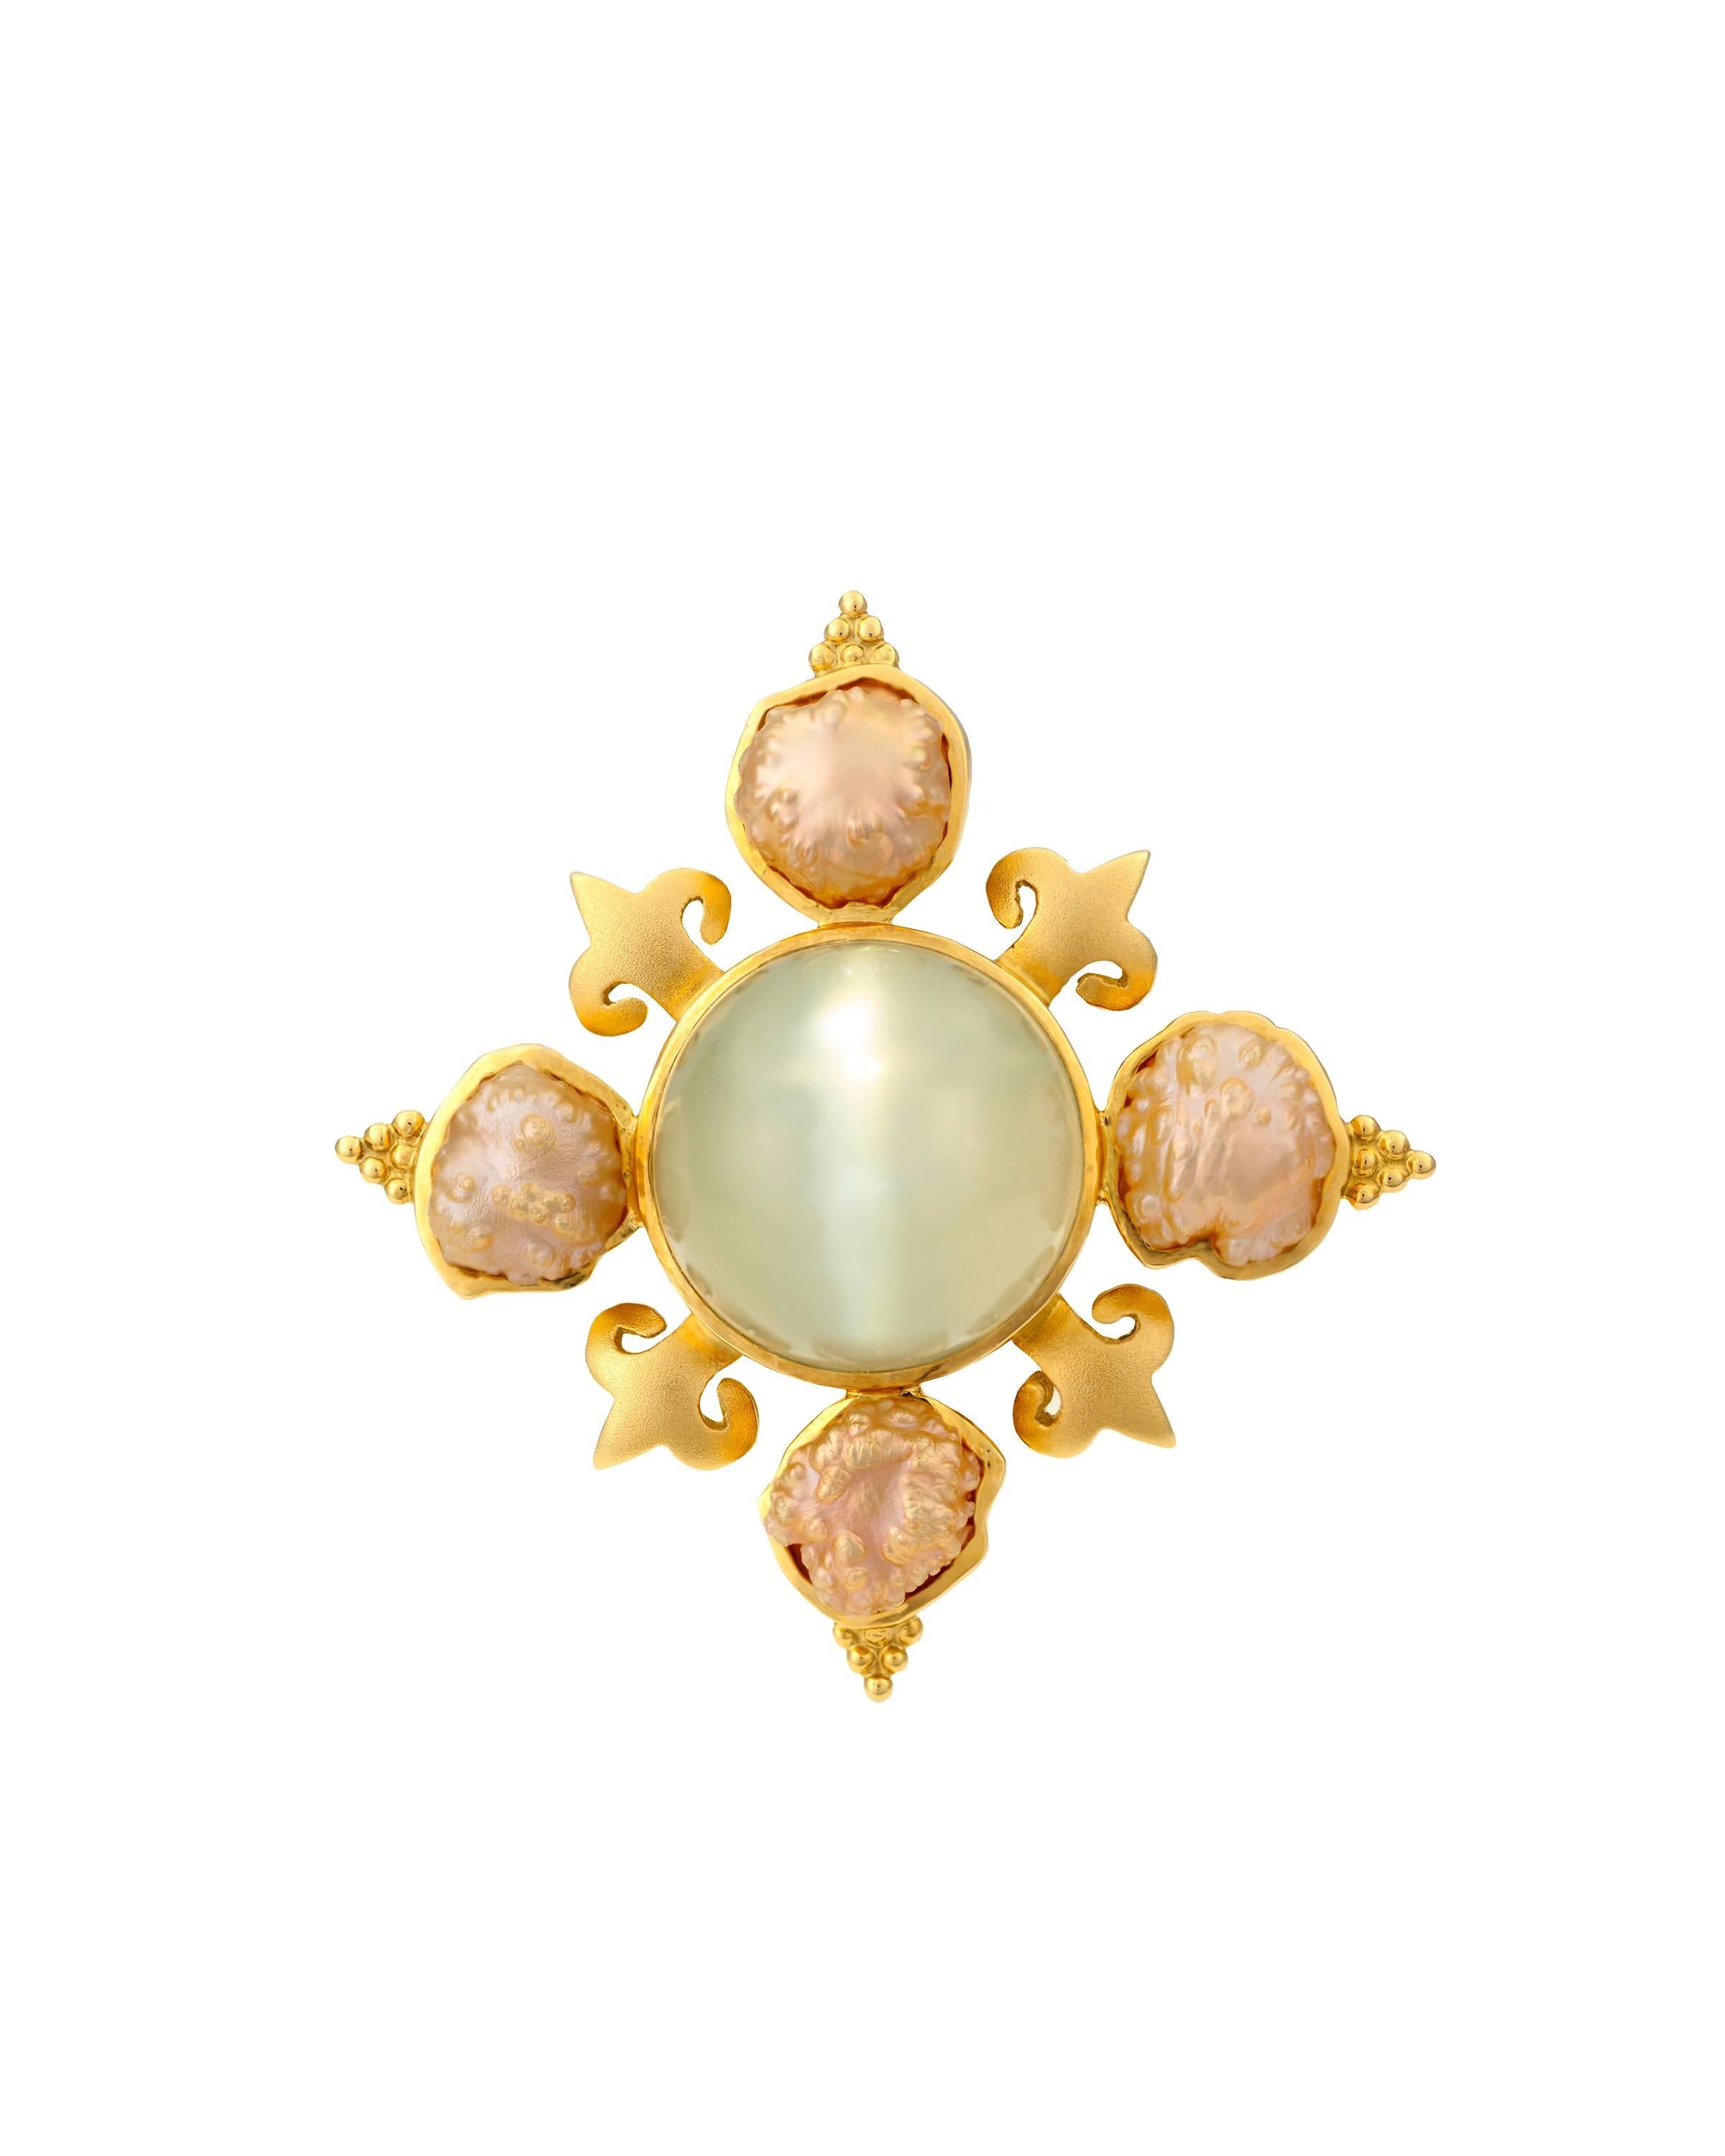 A rare Crevoshay brooch with cabochon moonstone and 4 Rosebud pearls.

Moonstone=53.82 ct. 